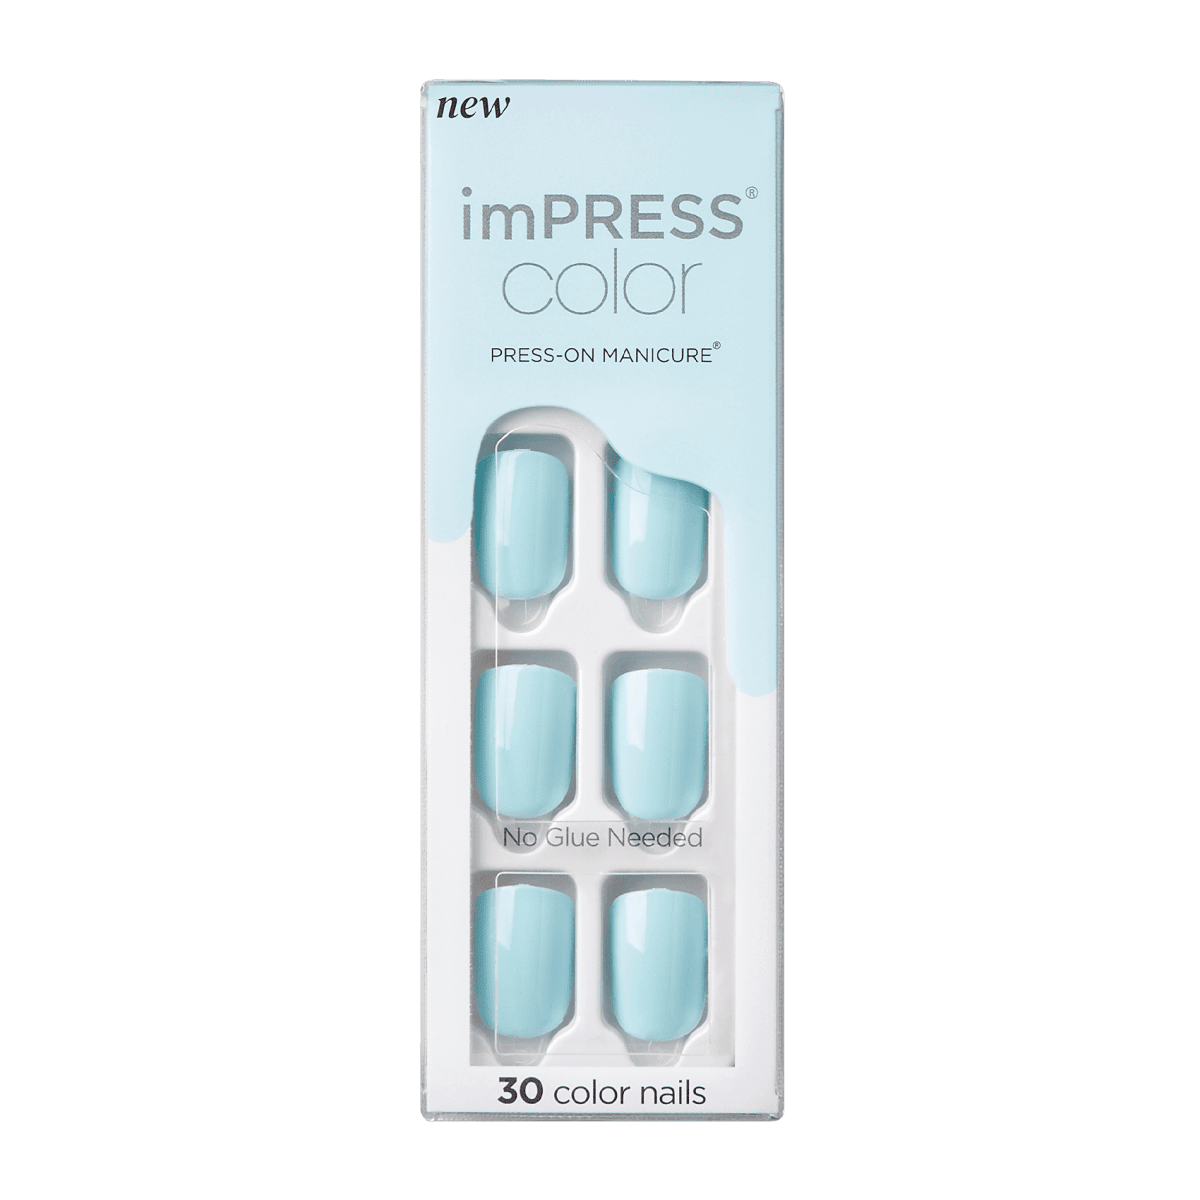 imPRESS Color Press-On Manicure - Dream Glow